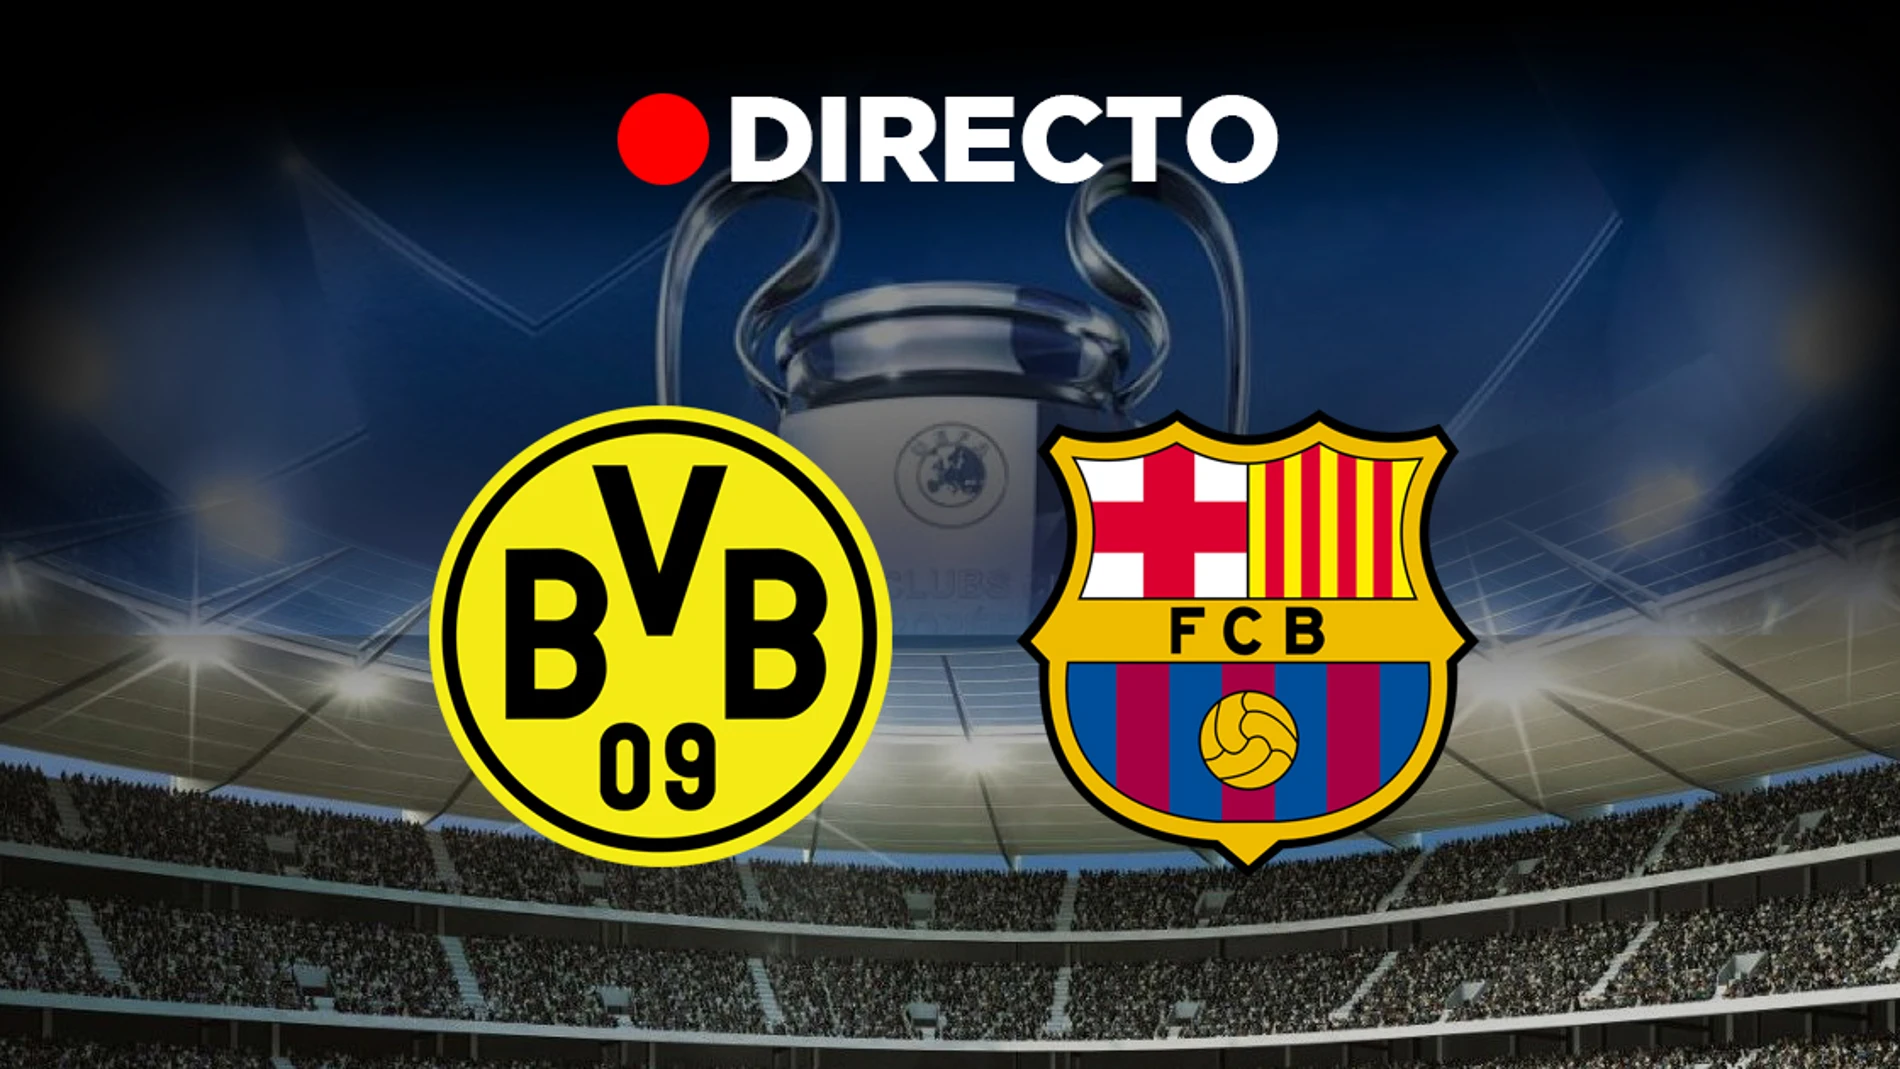 Borussia Dortmund - Fc Barcelona: Partido de Champions League 